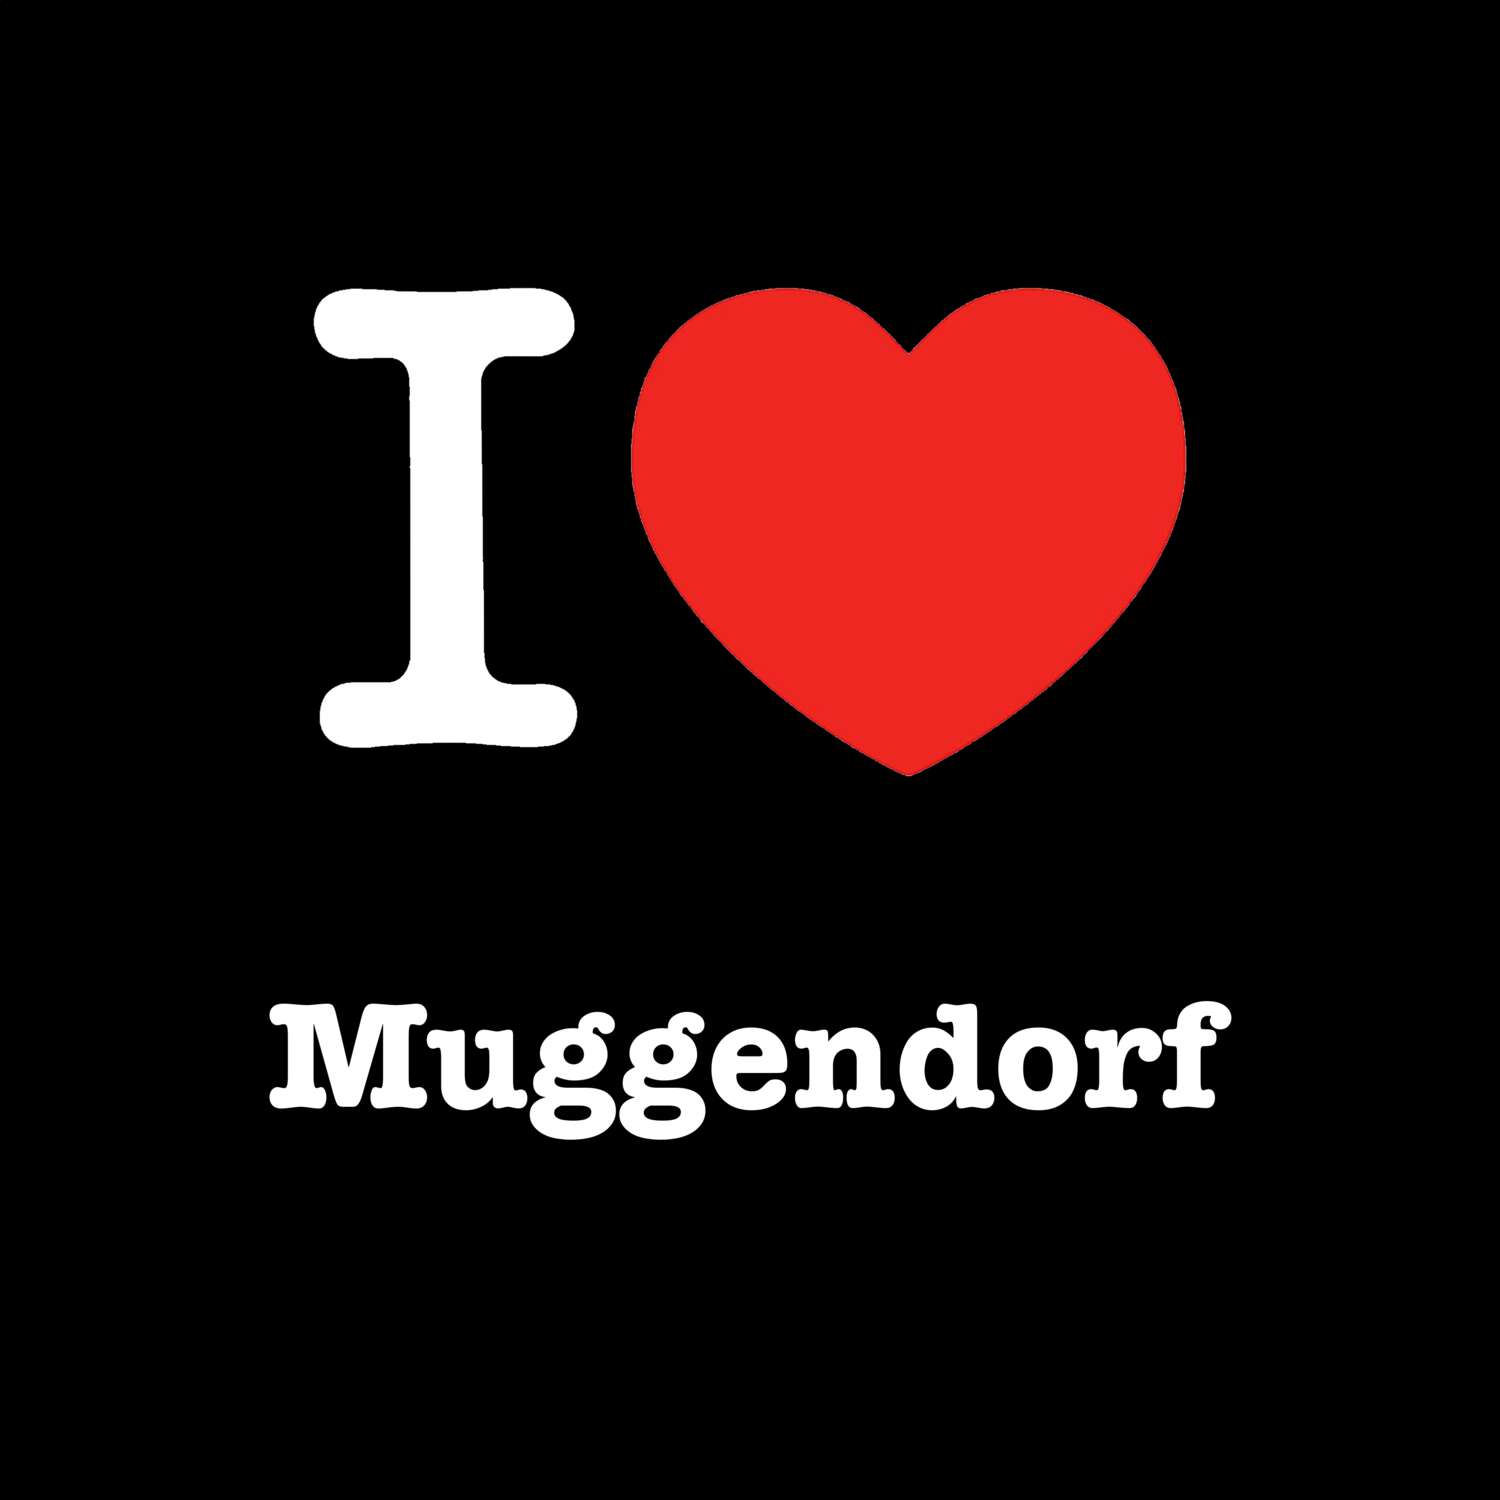 Muggendorf T-Shirt »I love«